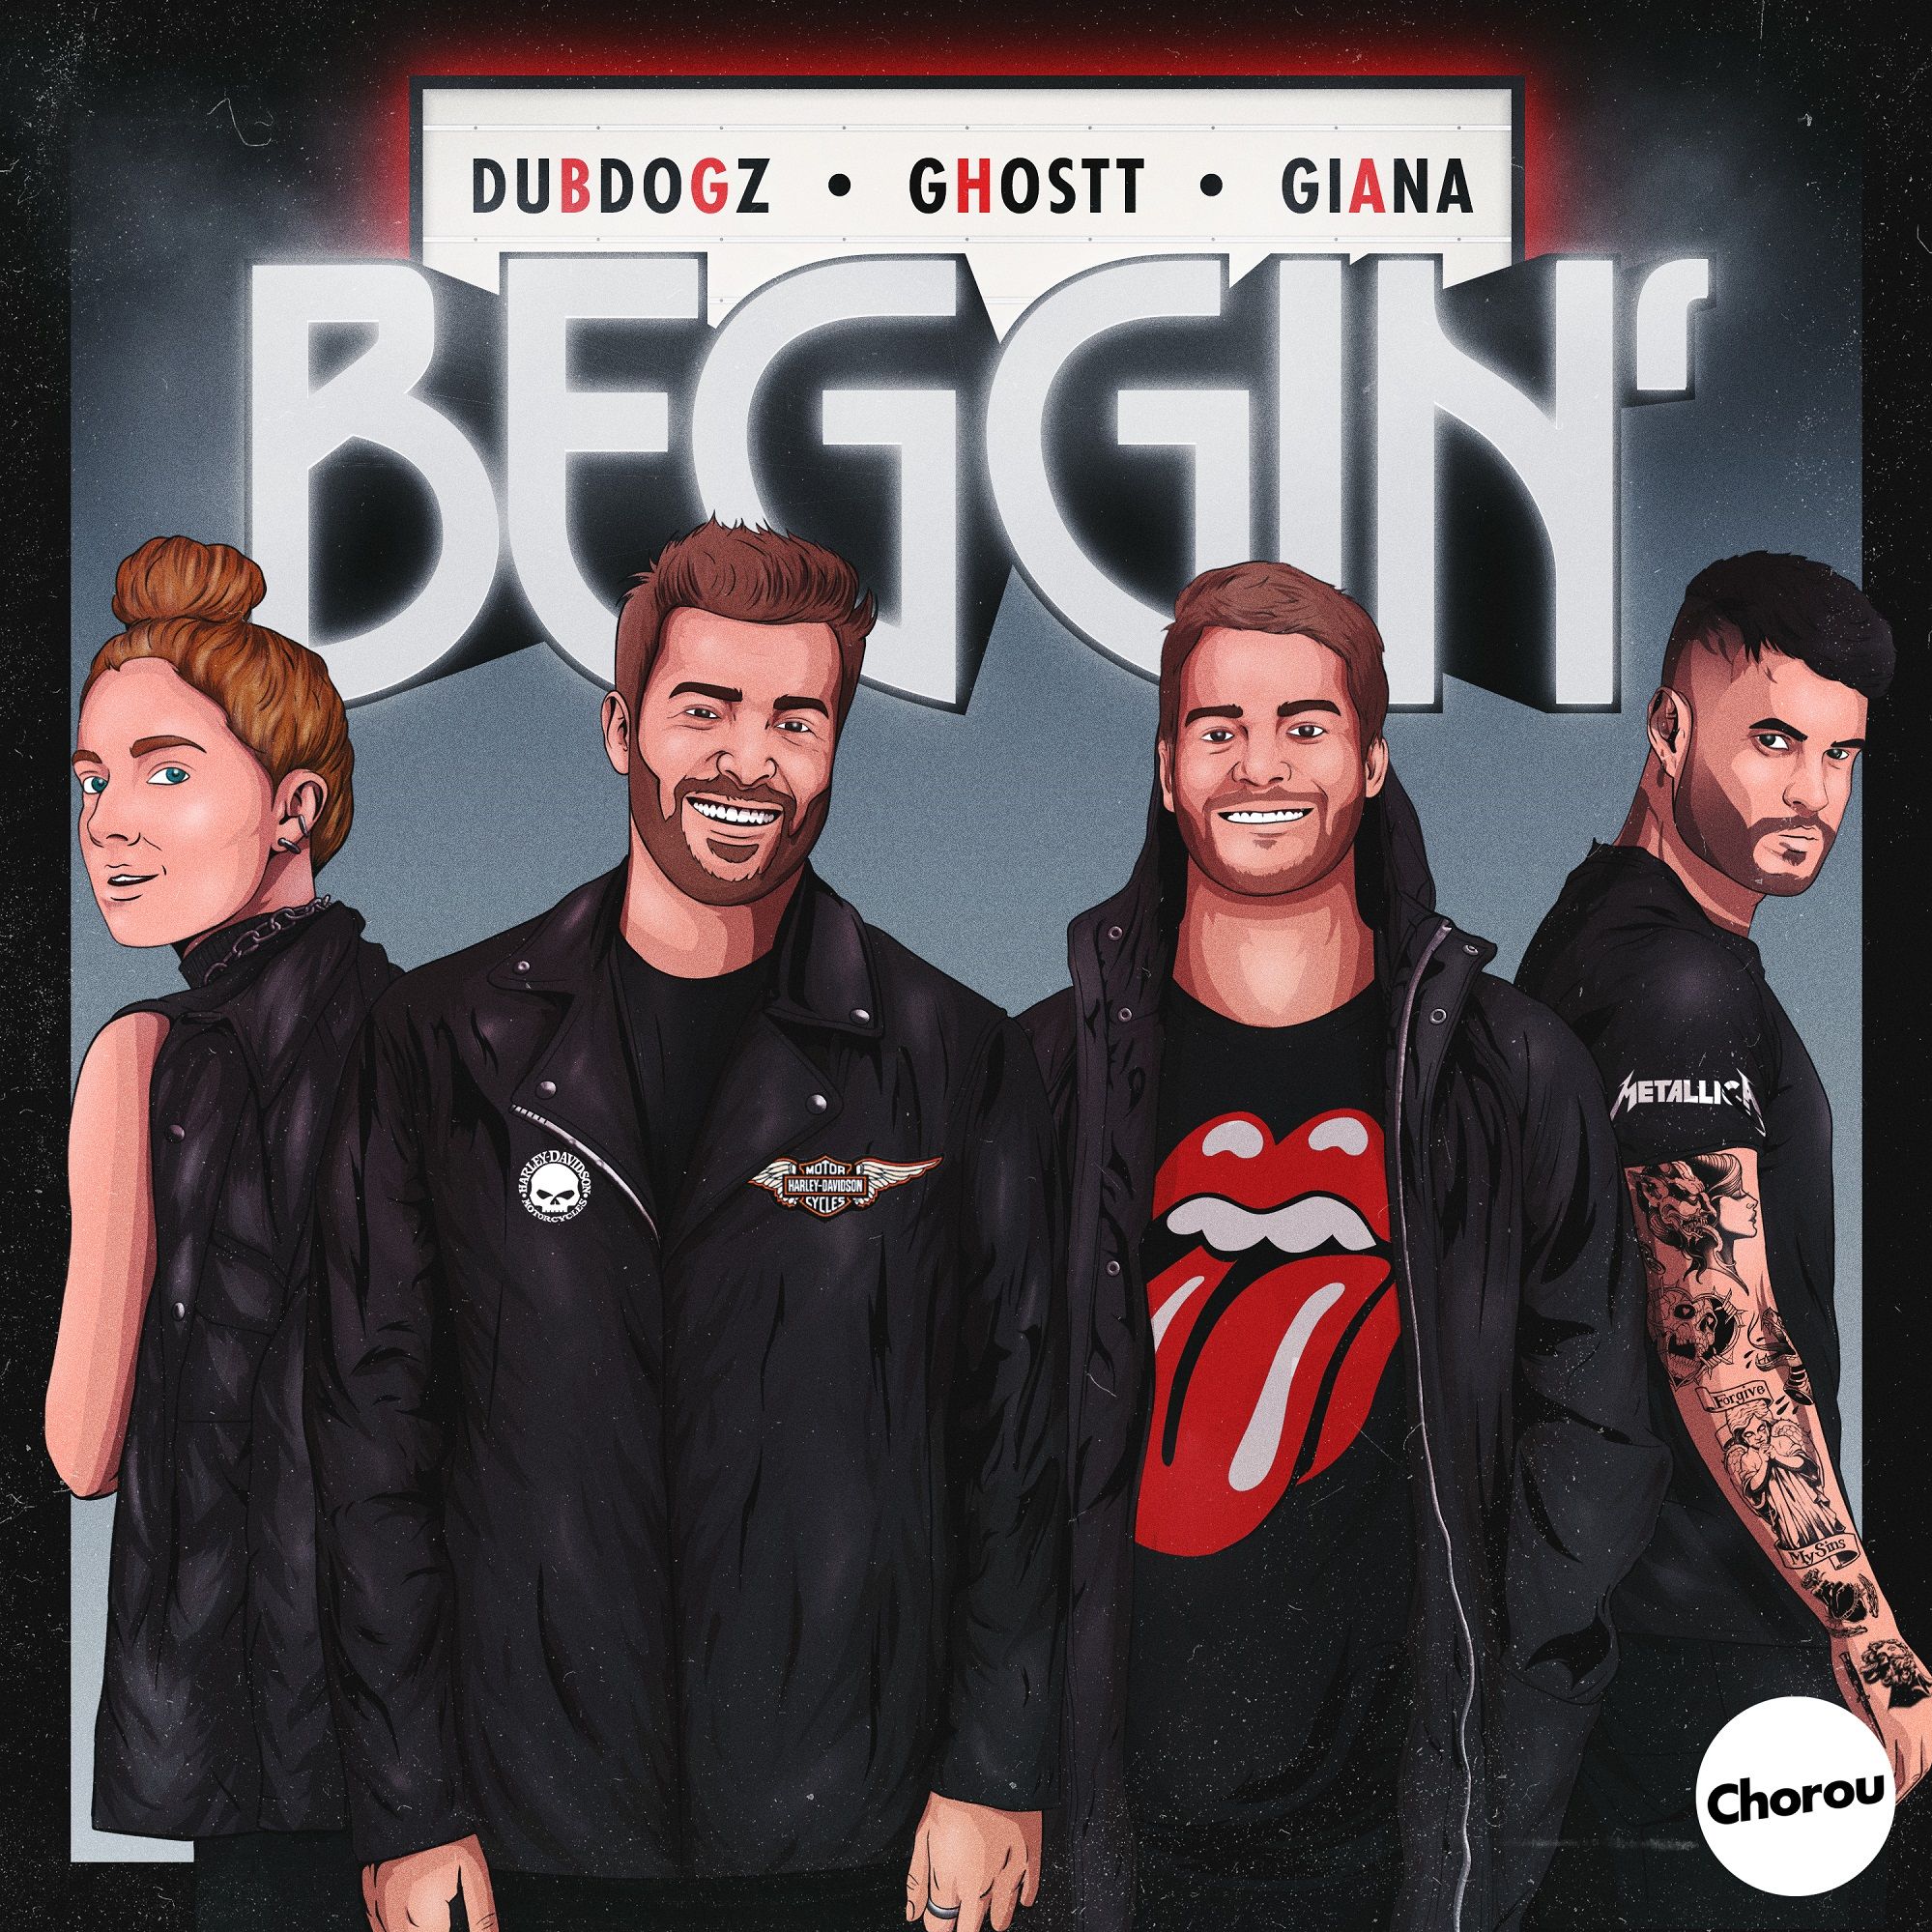 Tsitsani Dubdogz, Ghostt - Beggin' (feat. Giana) [Chorou Records]